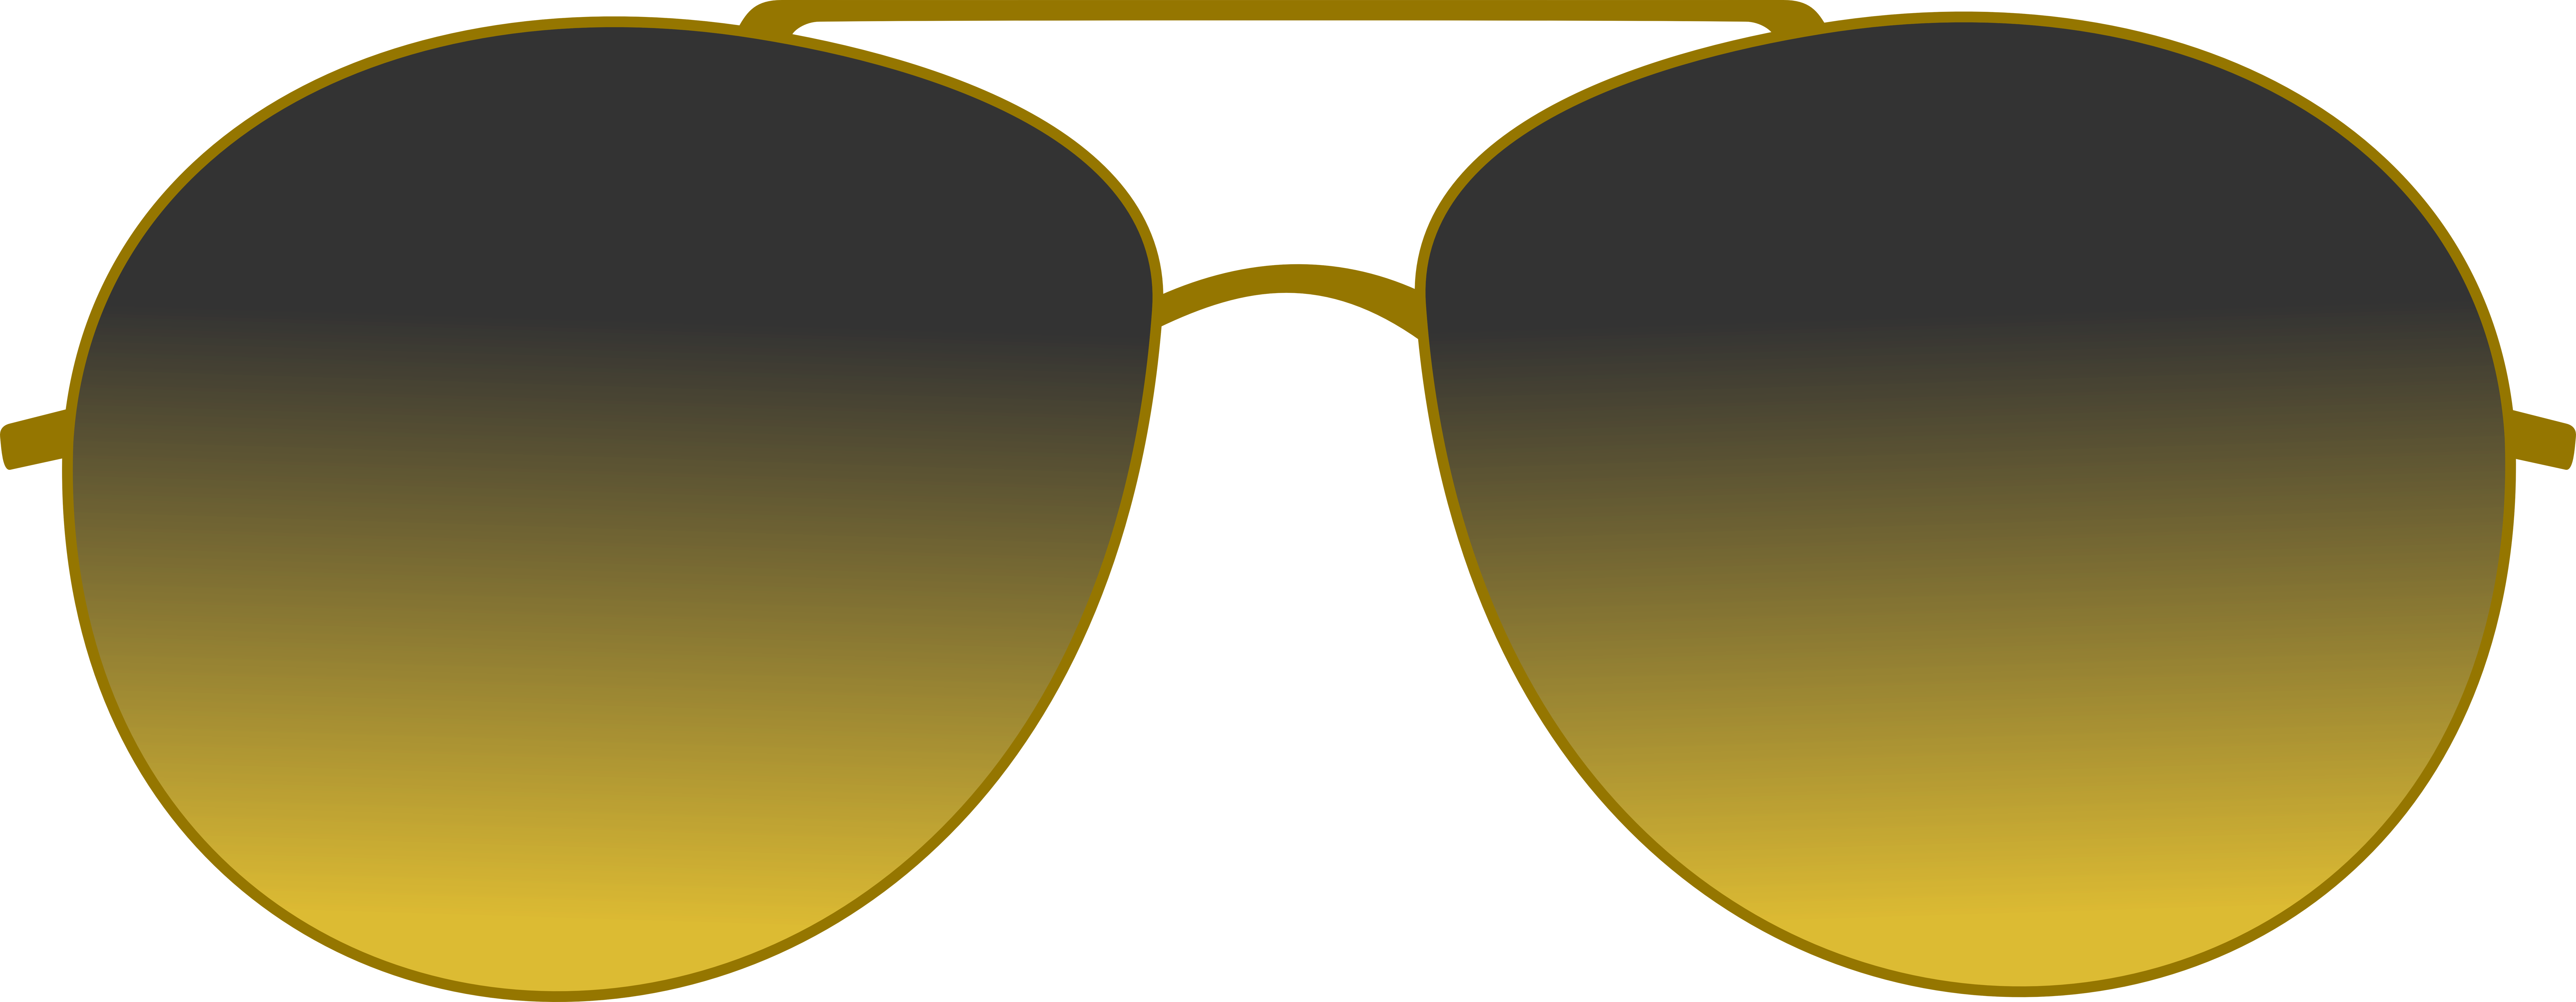 Aviator group shades cliparts. Clipart sunglasses women's